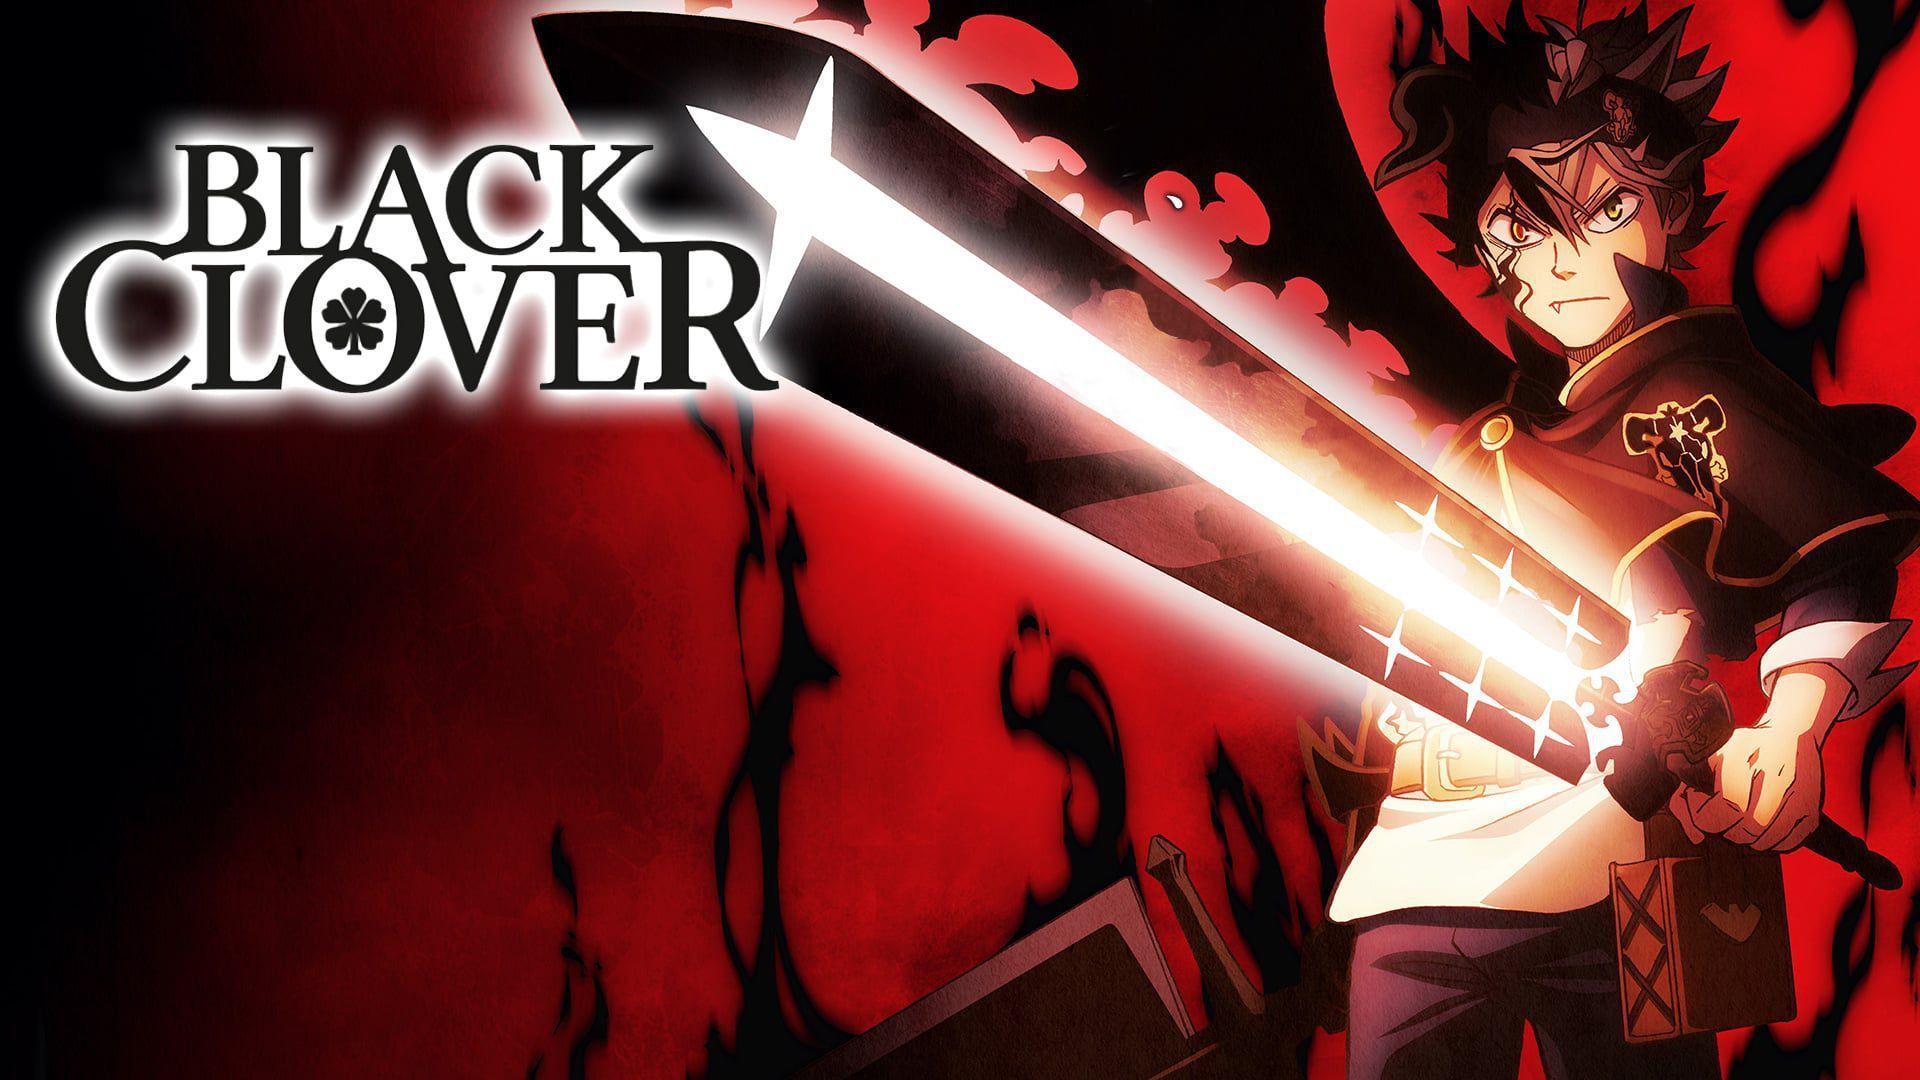 Black Clover. HD Image. Anime wallpaper, HD wallpaper, Wallpaper